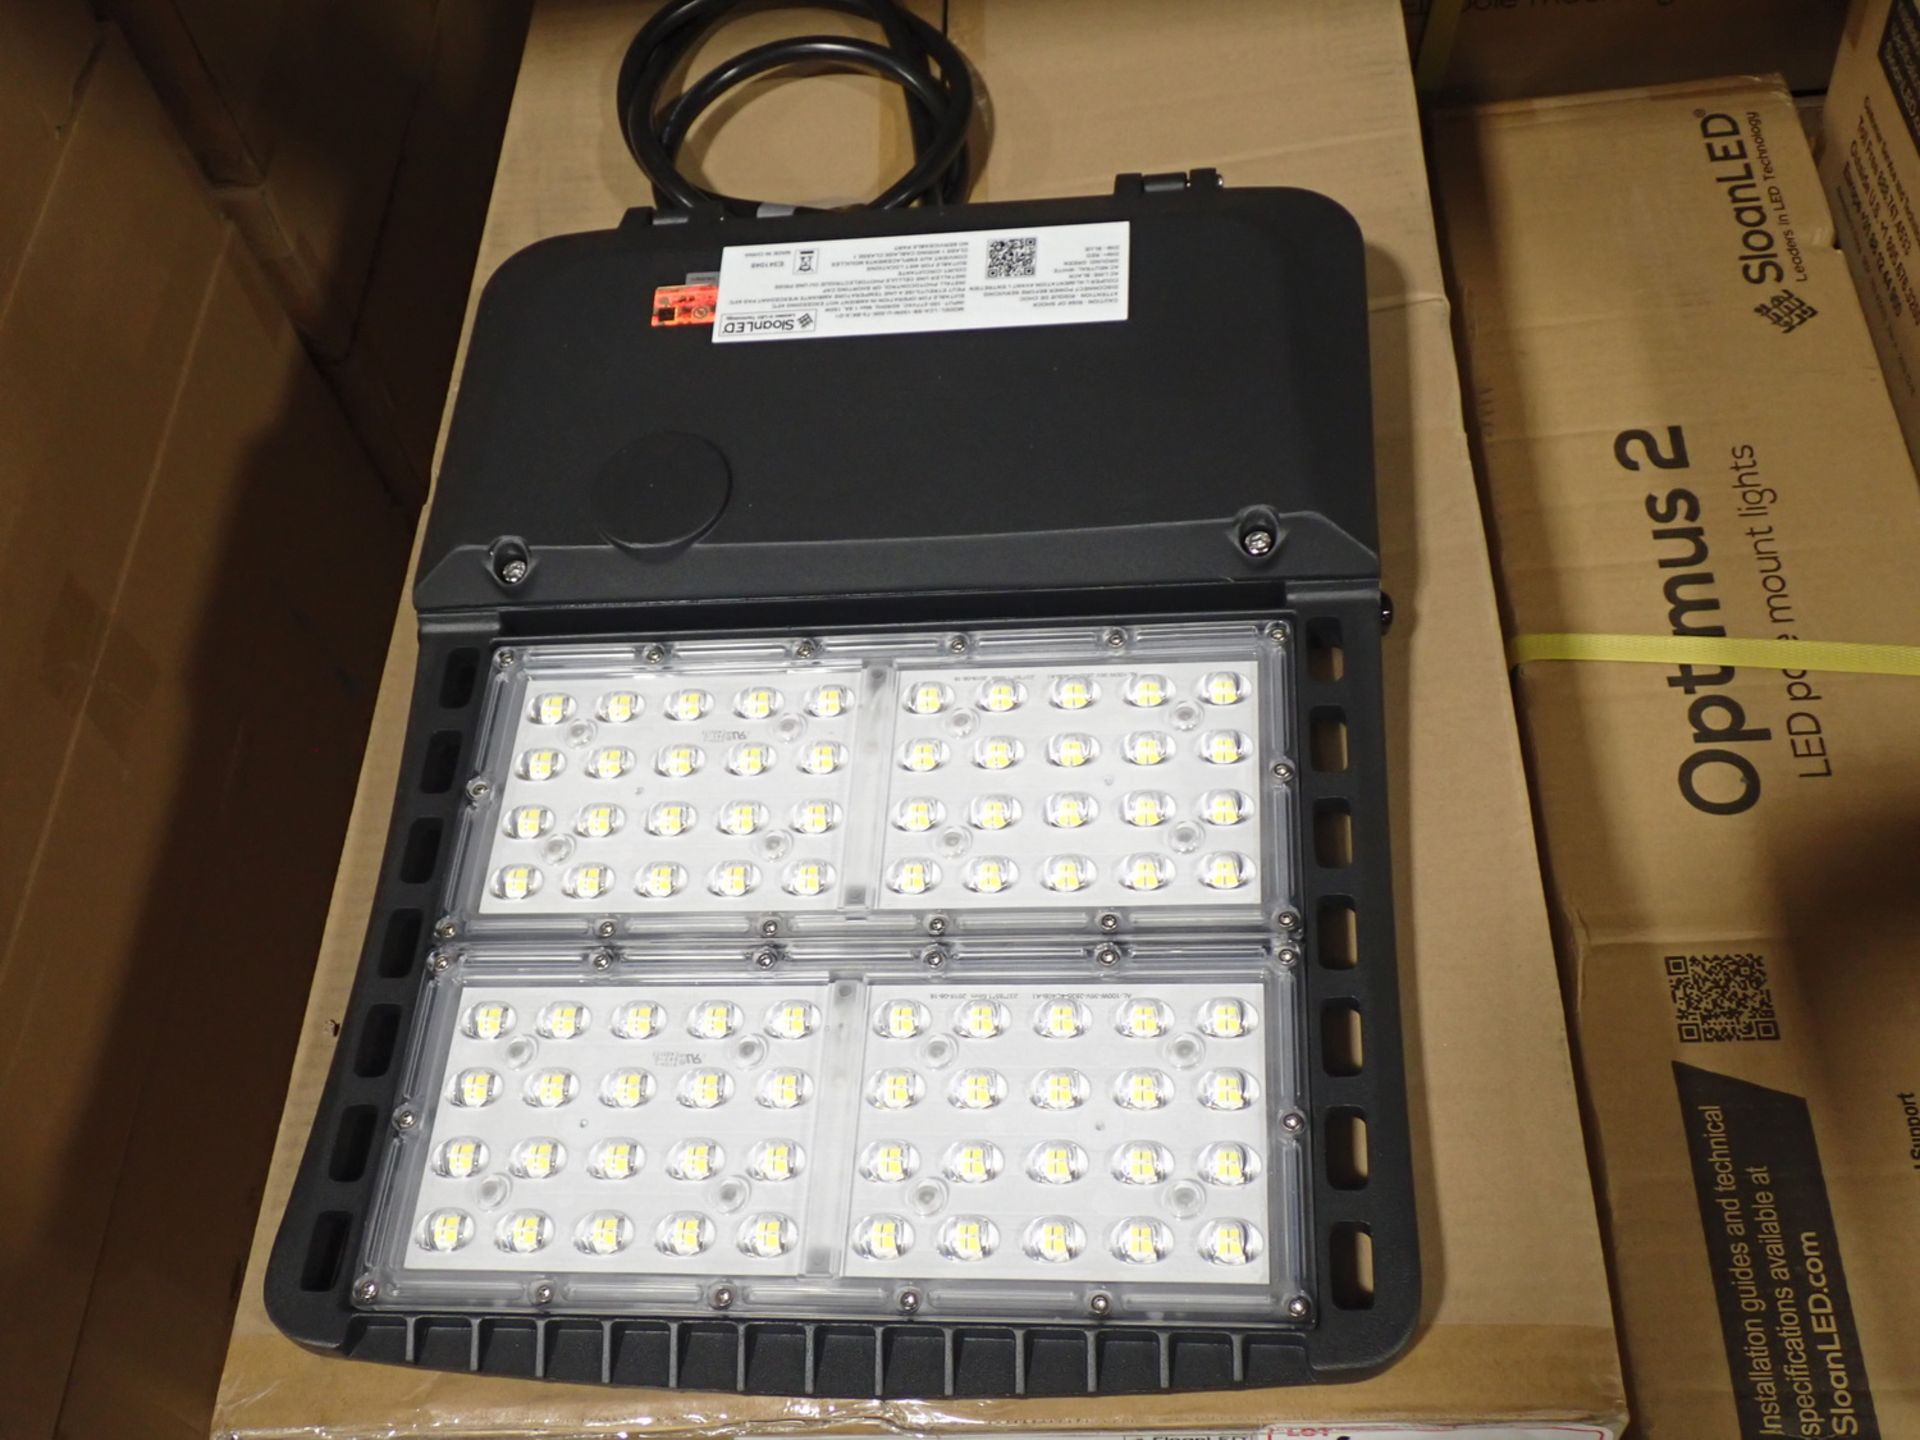 UNITS - SLOANLED OPTIMUS 2 OUTDOOR LED AREA LIGHTS (100-277V) - Image 2 of 3